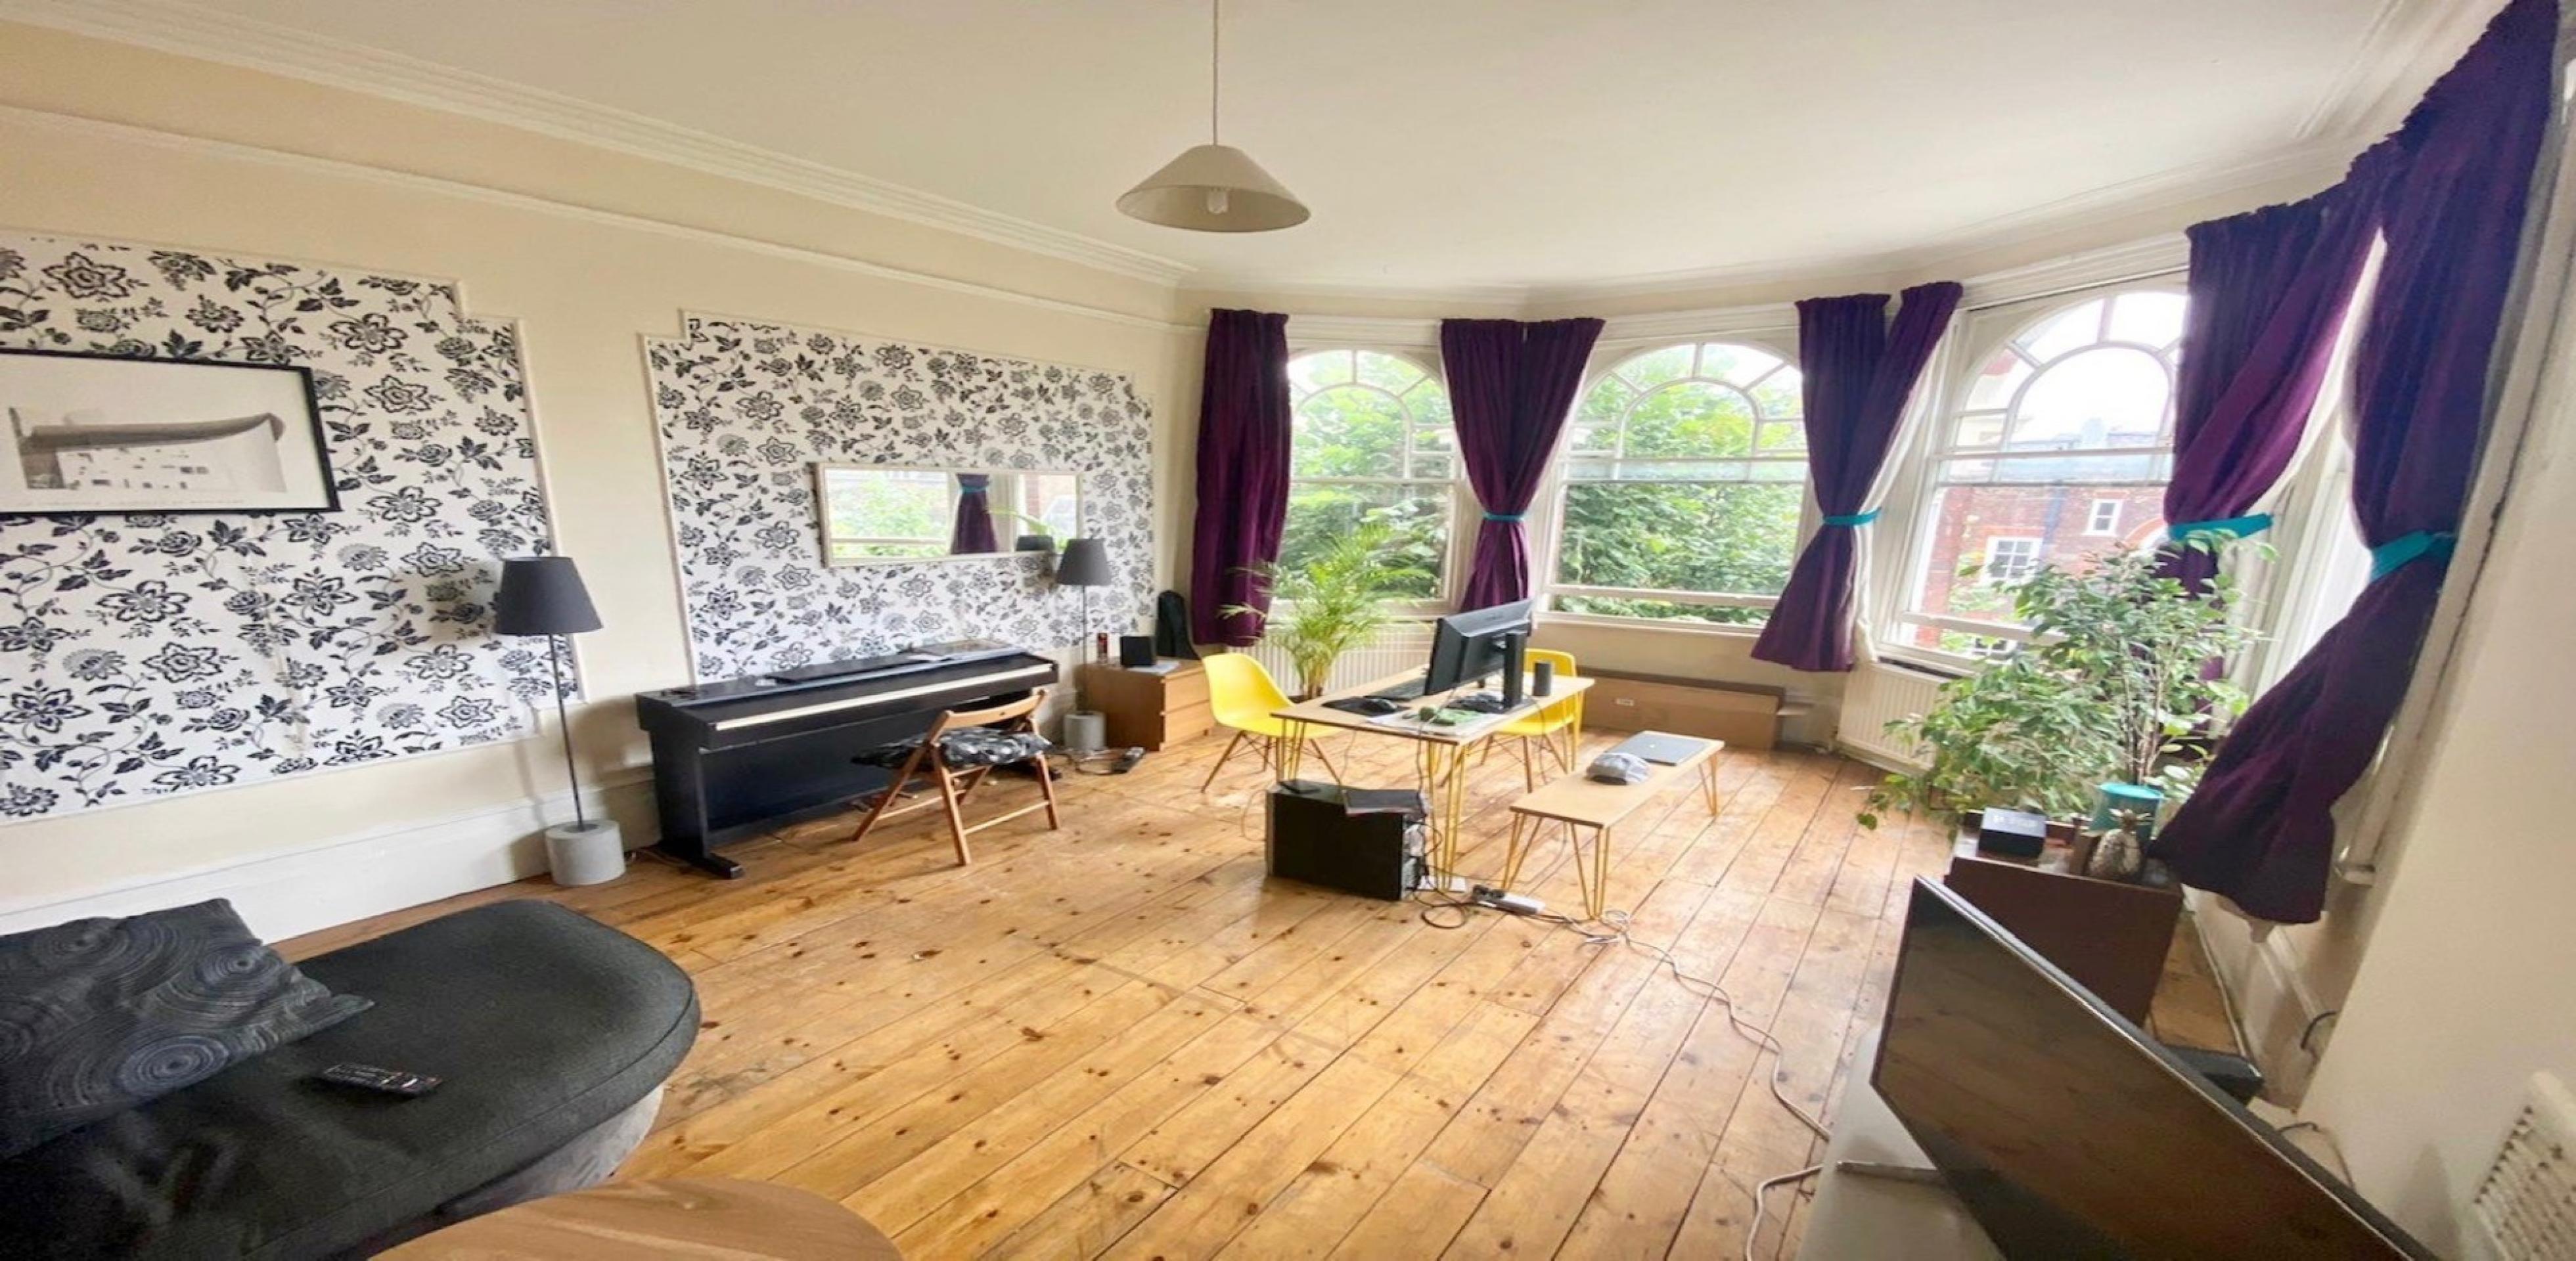 			3 Bedroom, 1 bath, 1 reception Apartment			 Hornsey Lane, HIGHGATE - ARCHWAY N6